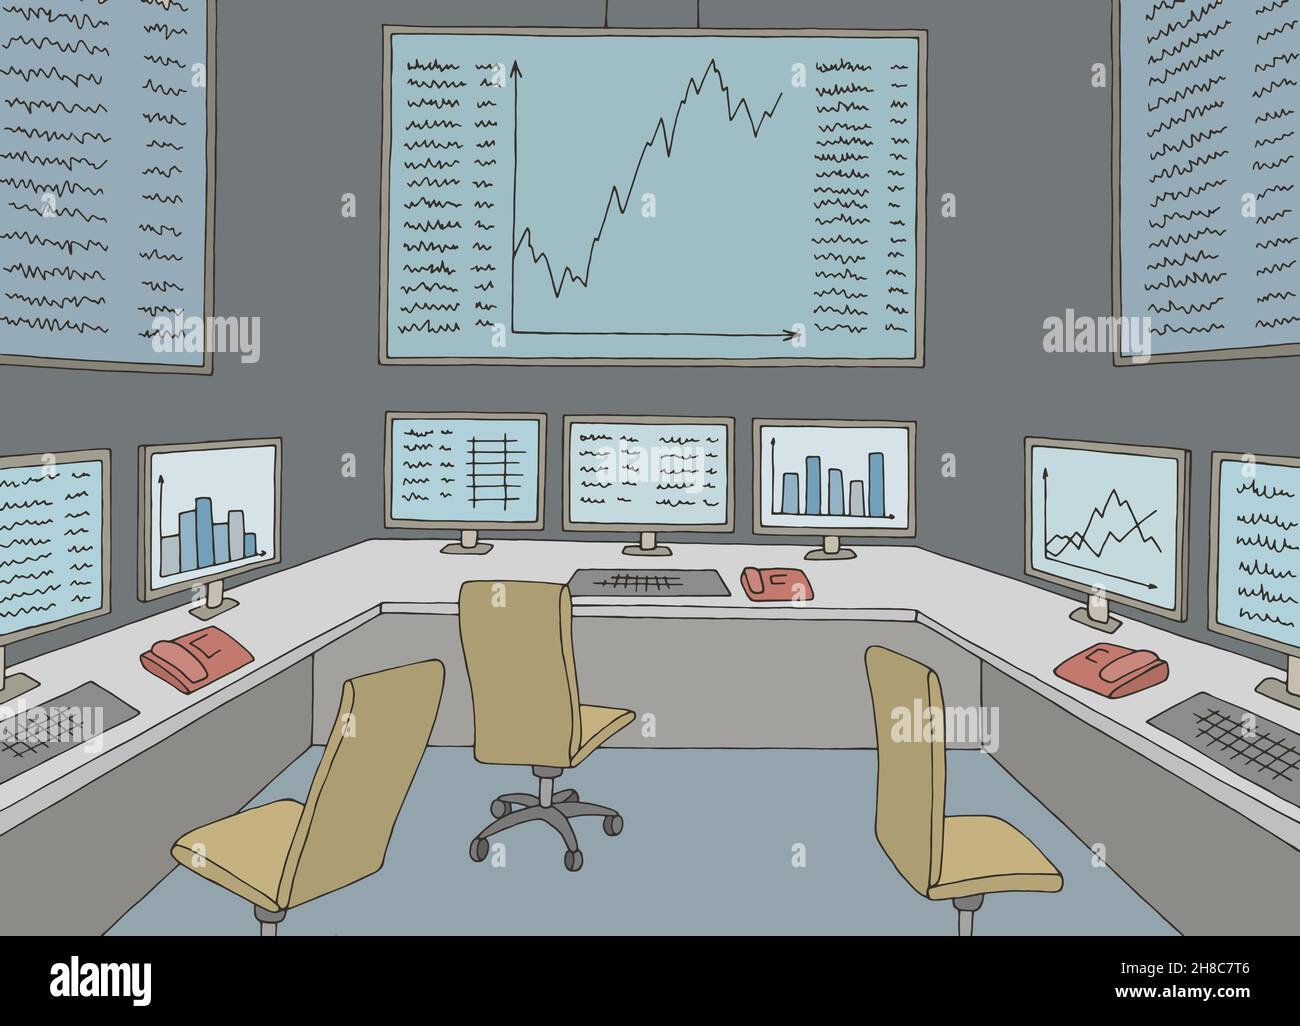 Stock exchange interior office graphic color interior sketch illustration vector Stock Vector